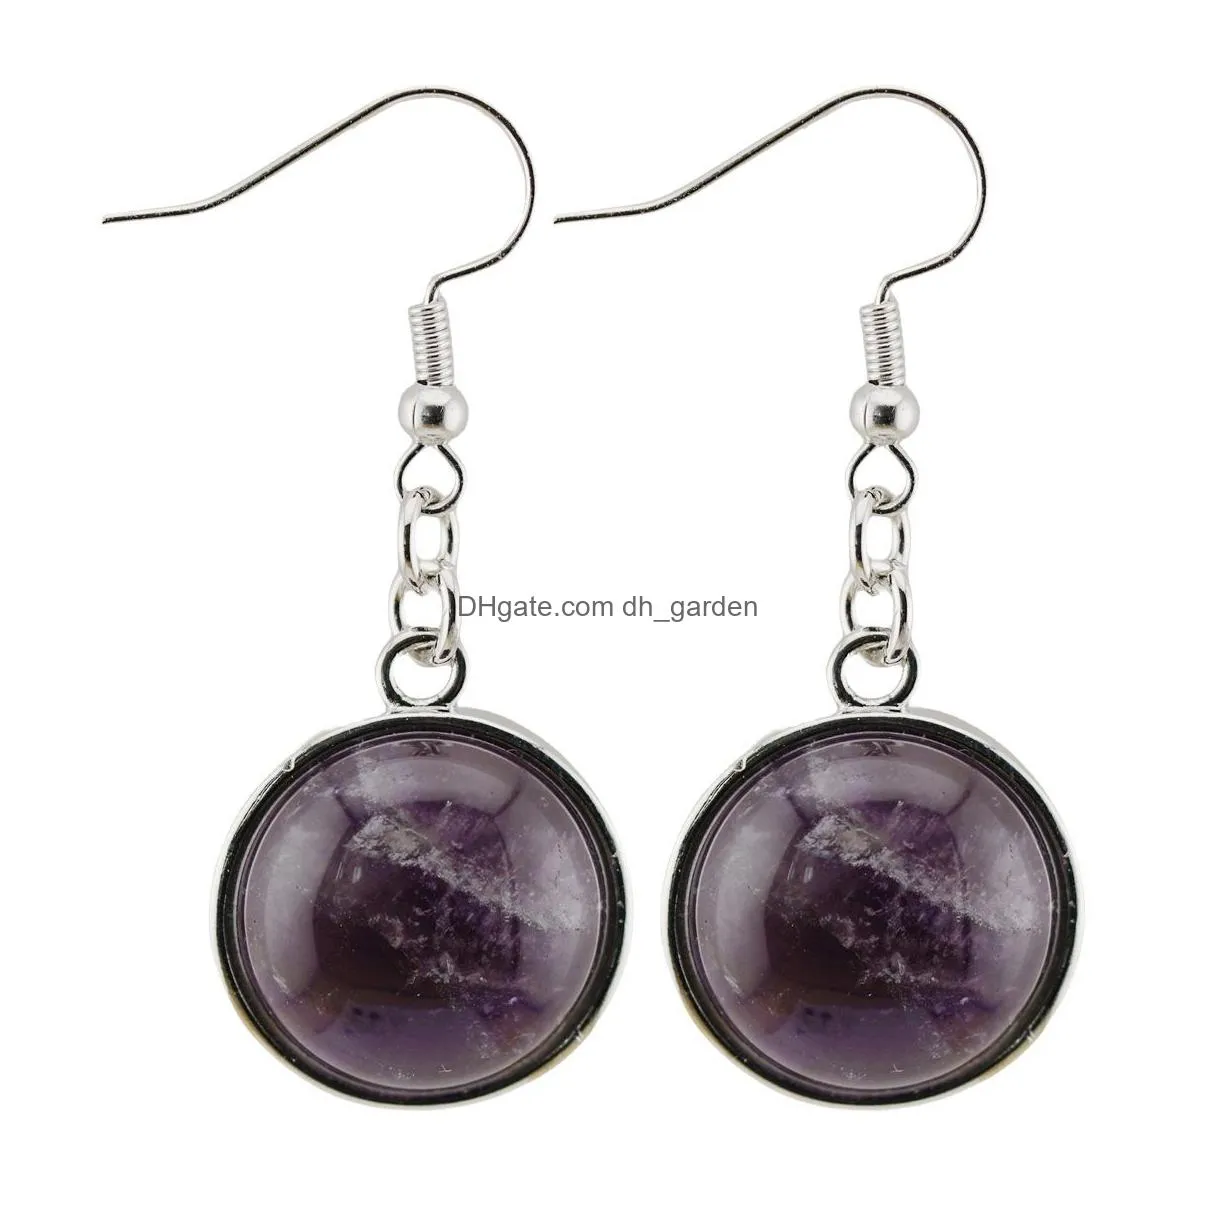 south american minimalist circular earrings natural stone crystal earrings women`s fish hook earrings holiday gifts